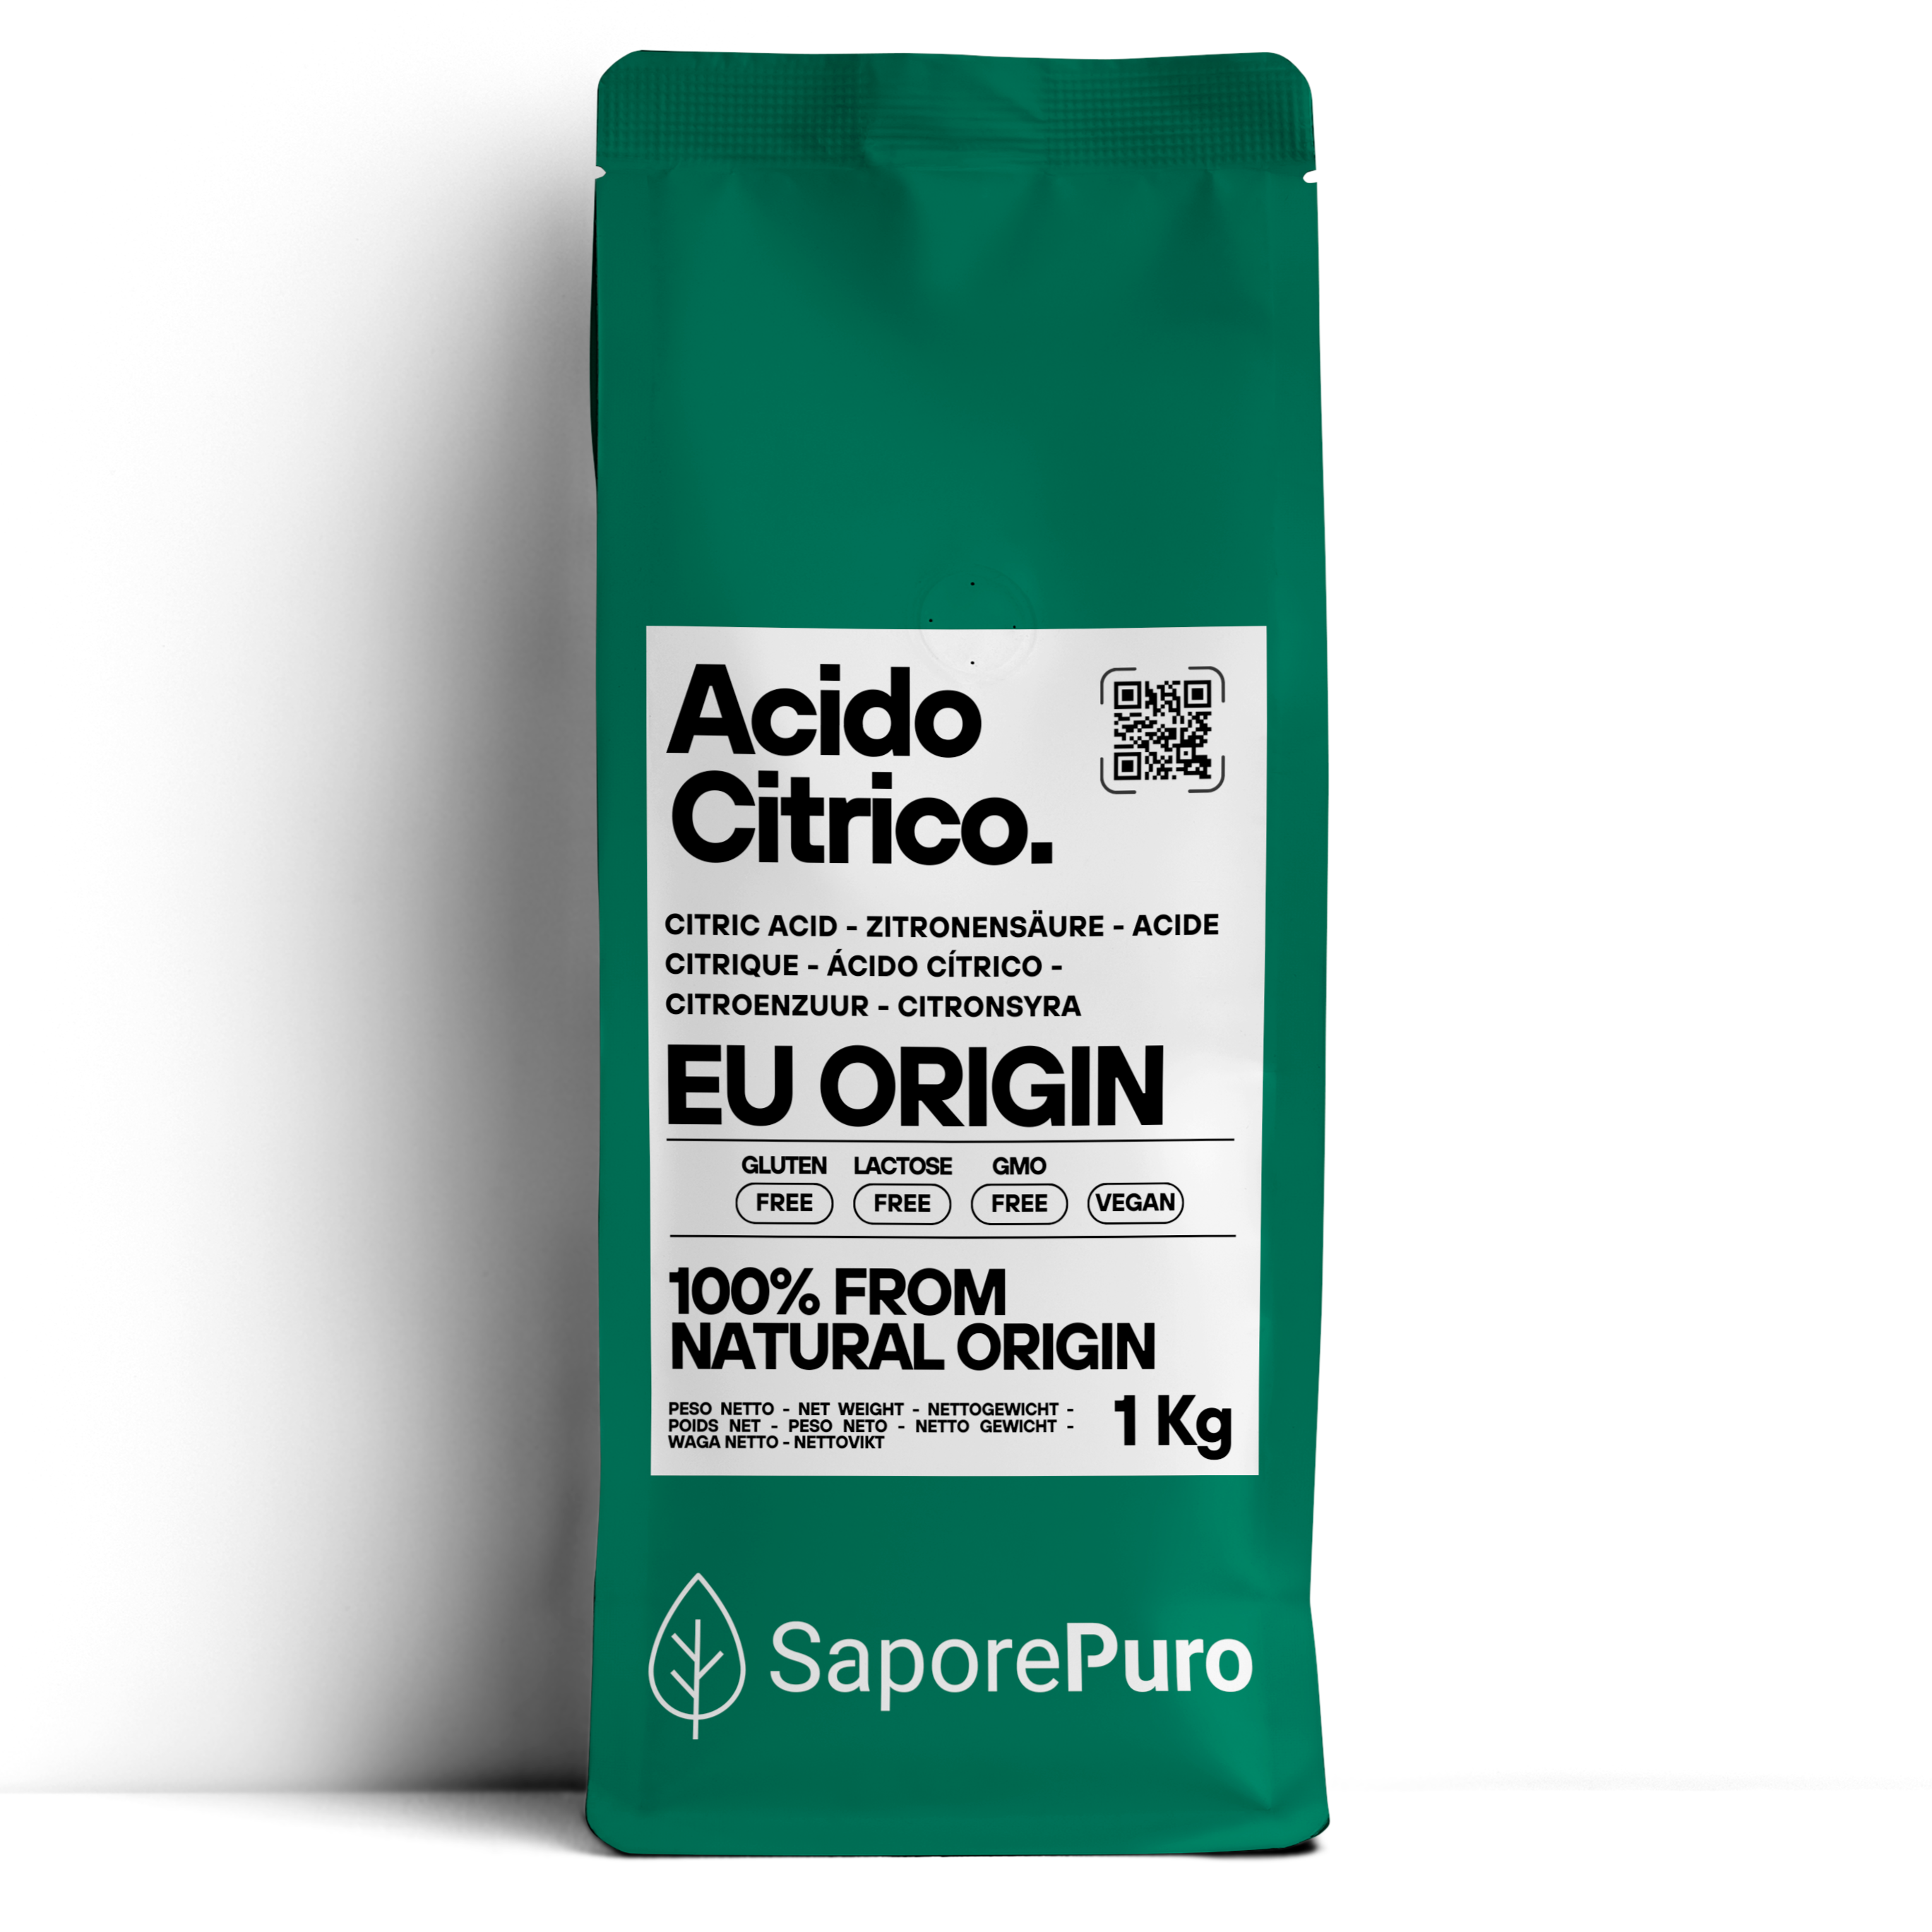 Acido Citrico- 1kg - Cockatail, Vino, Pulizie, Enologia - Made in EU